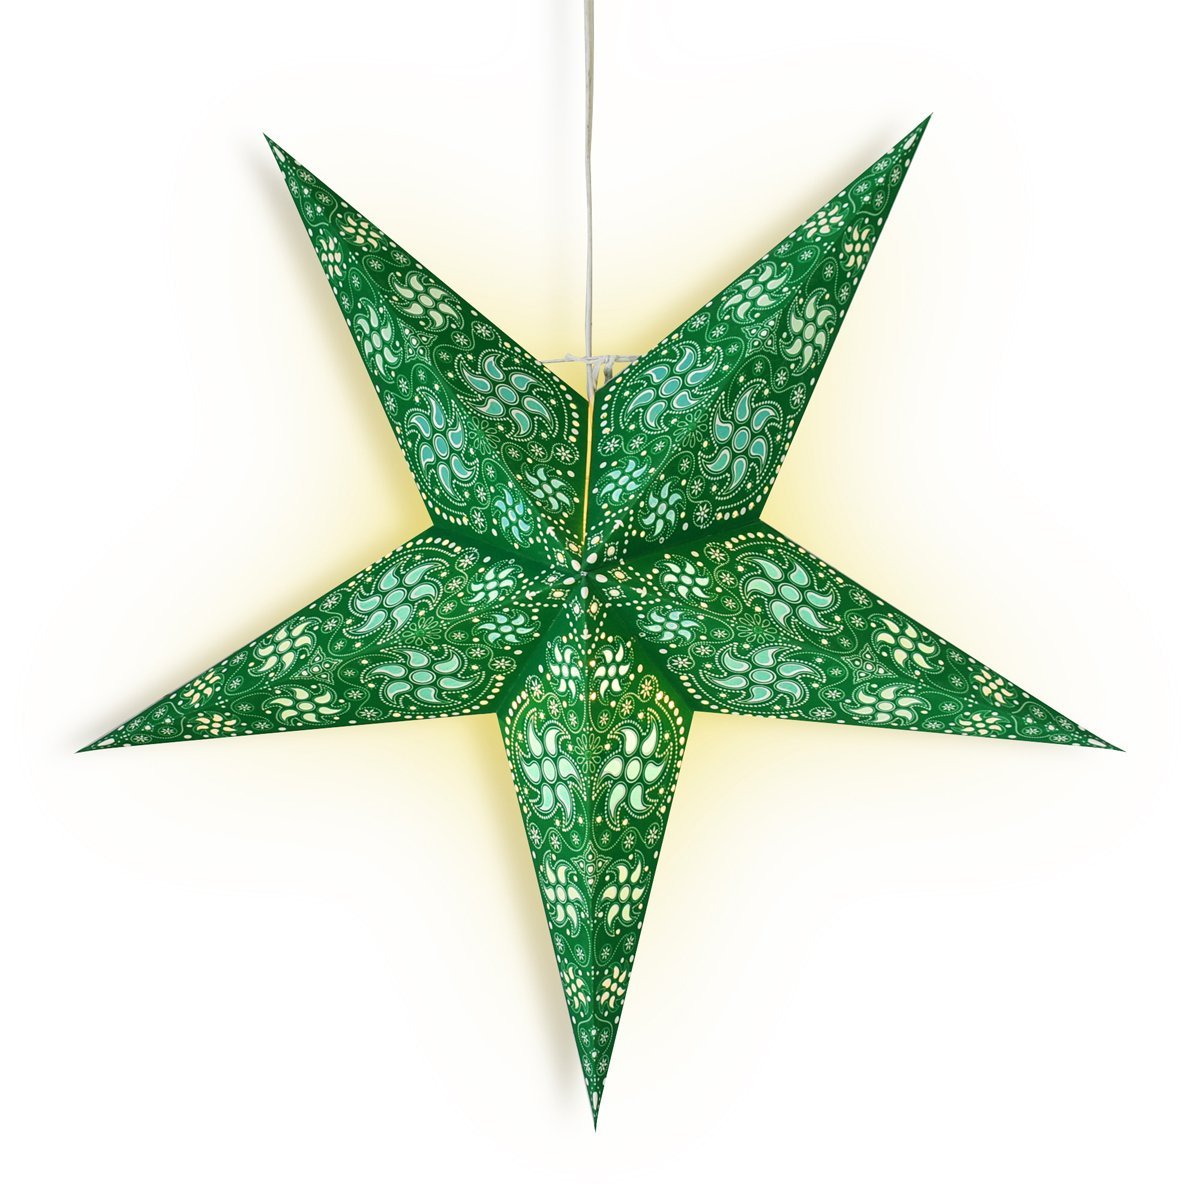 24" Green Winds Paper Star Lantern, Hanging Wedding & Party Decoration - PaperLanternStore.com - Paper Lanterns, Decor, Party Lights & More